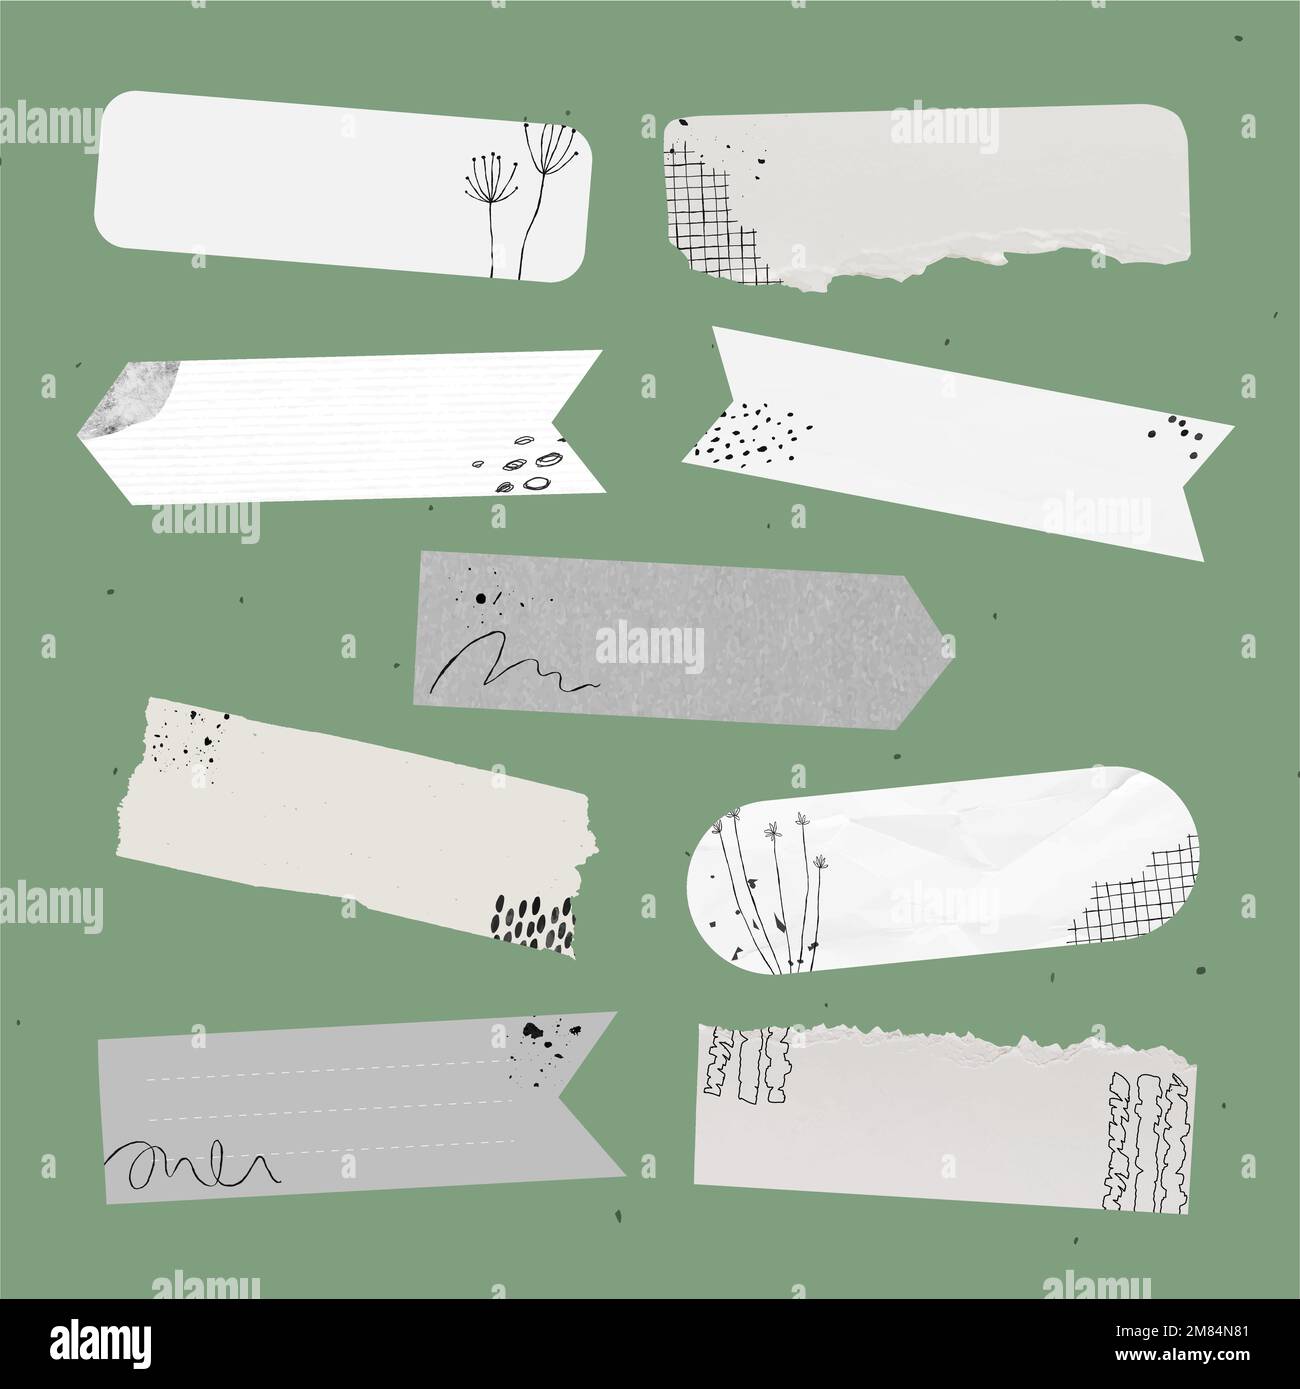 Washi Tape Collage Elements and DIY Washi Tape